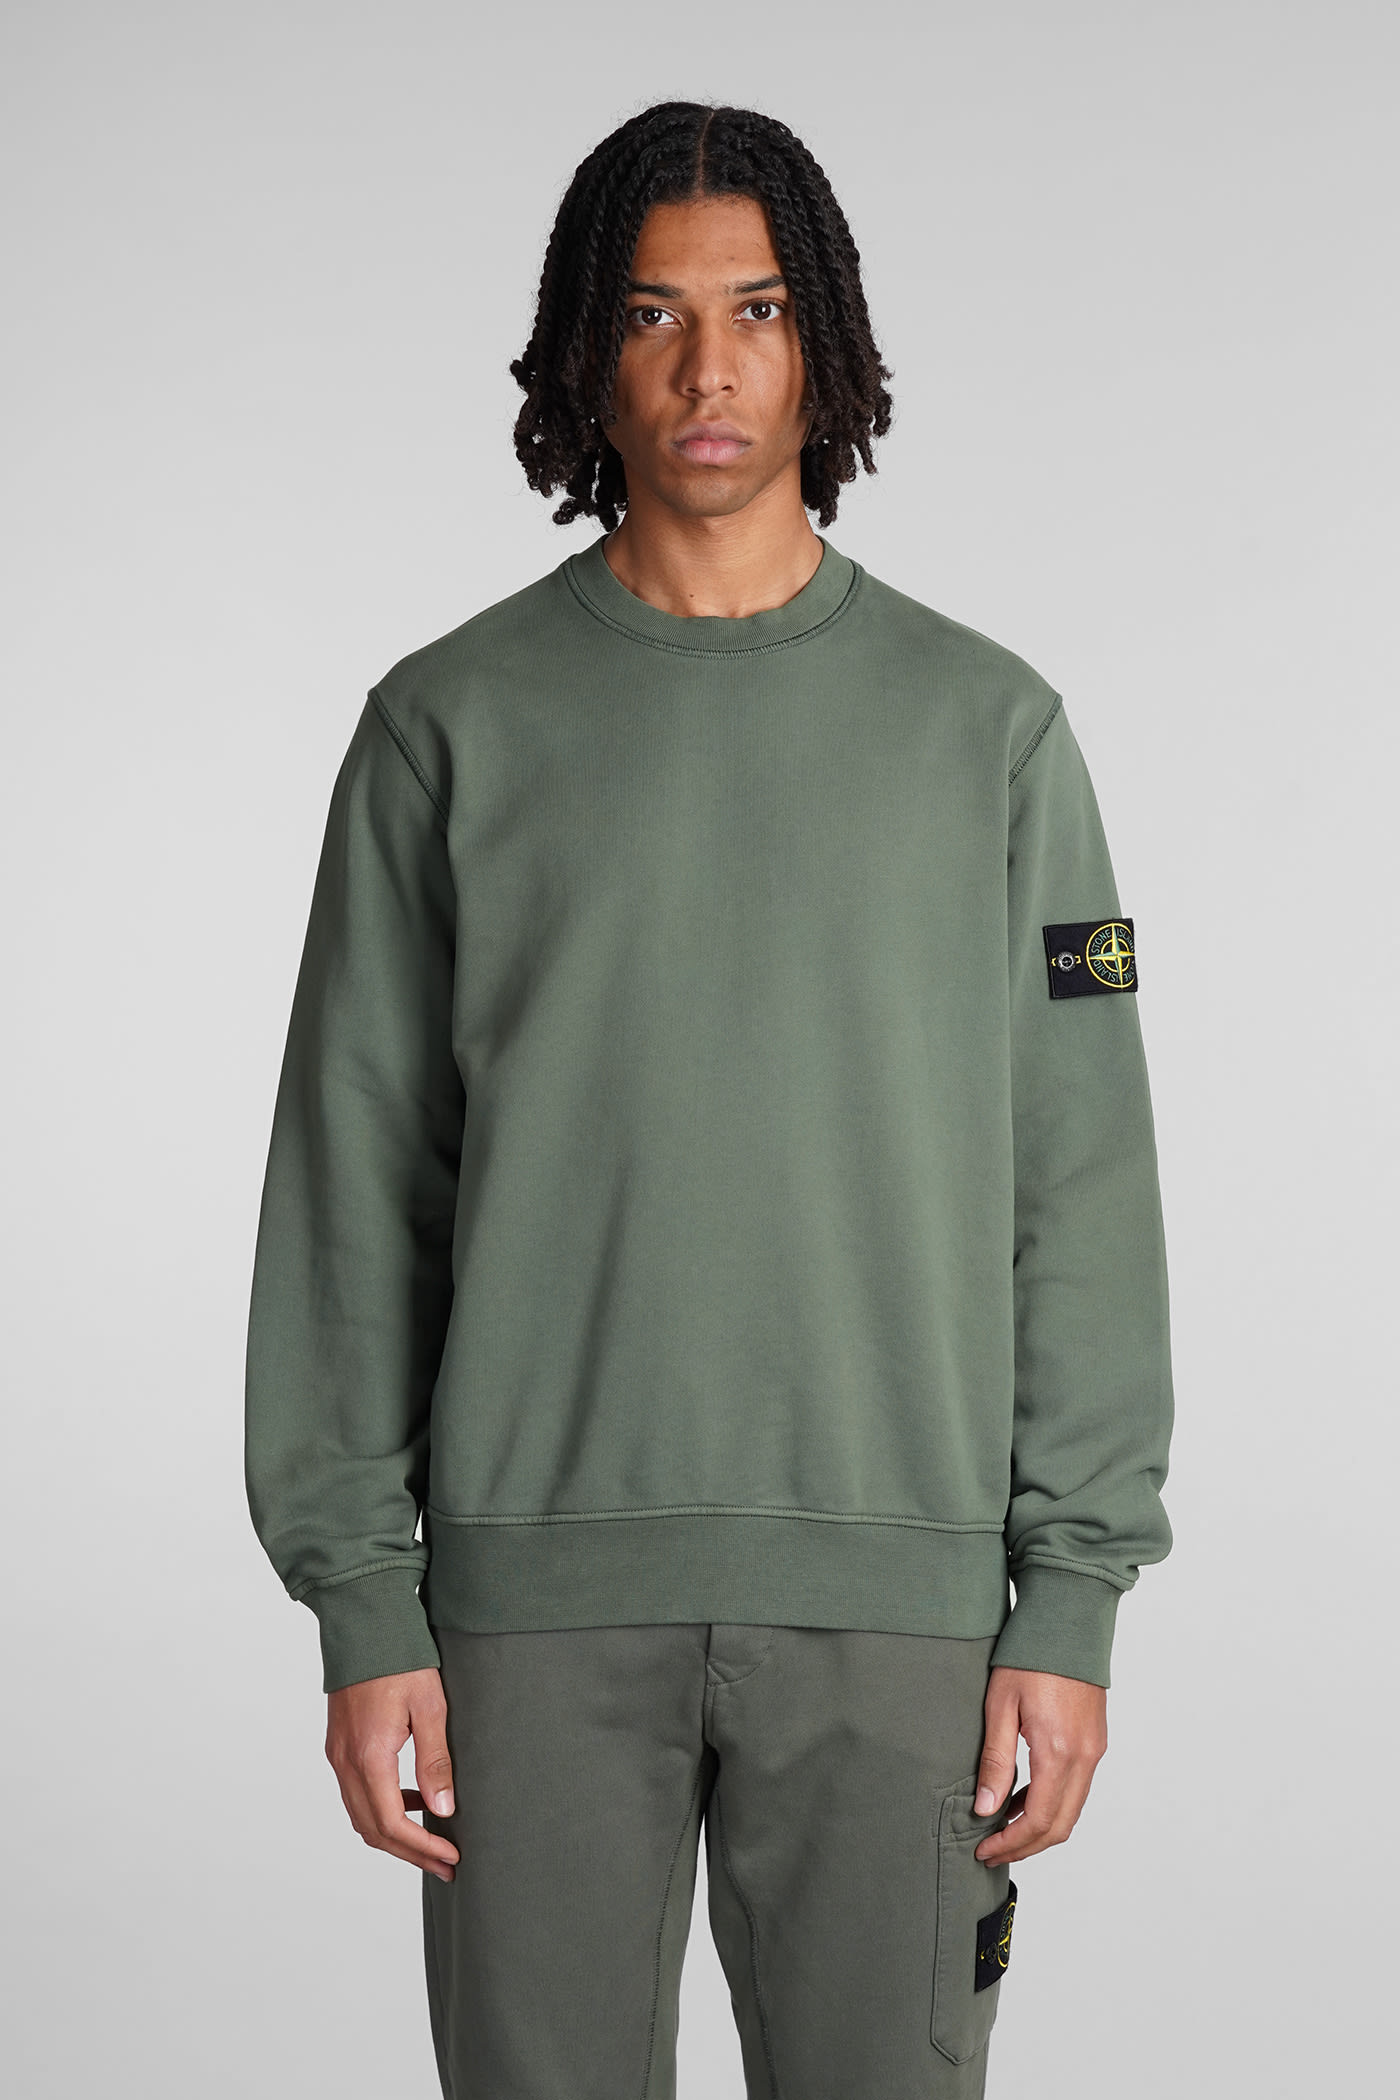 Stone Island Sweatshirt In Green Cotton